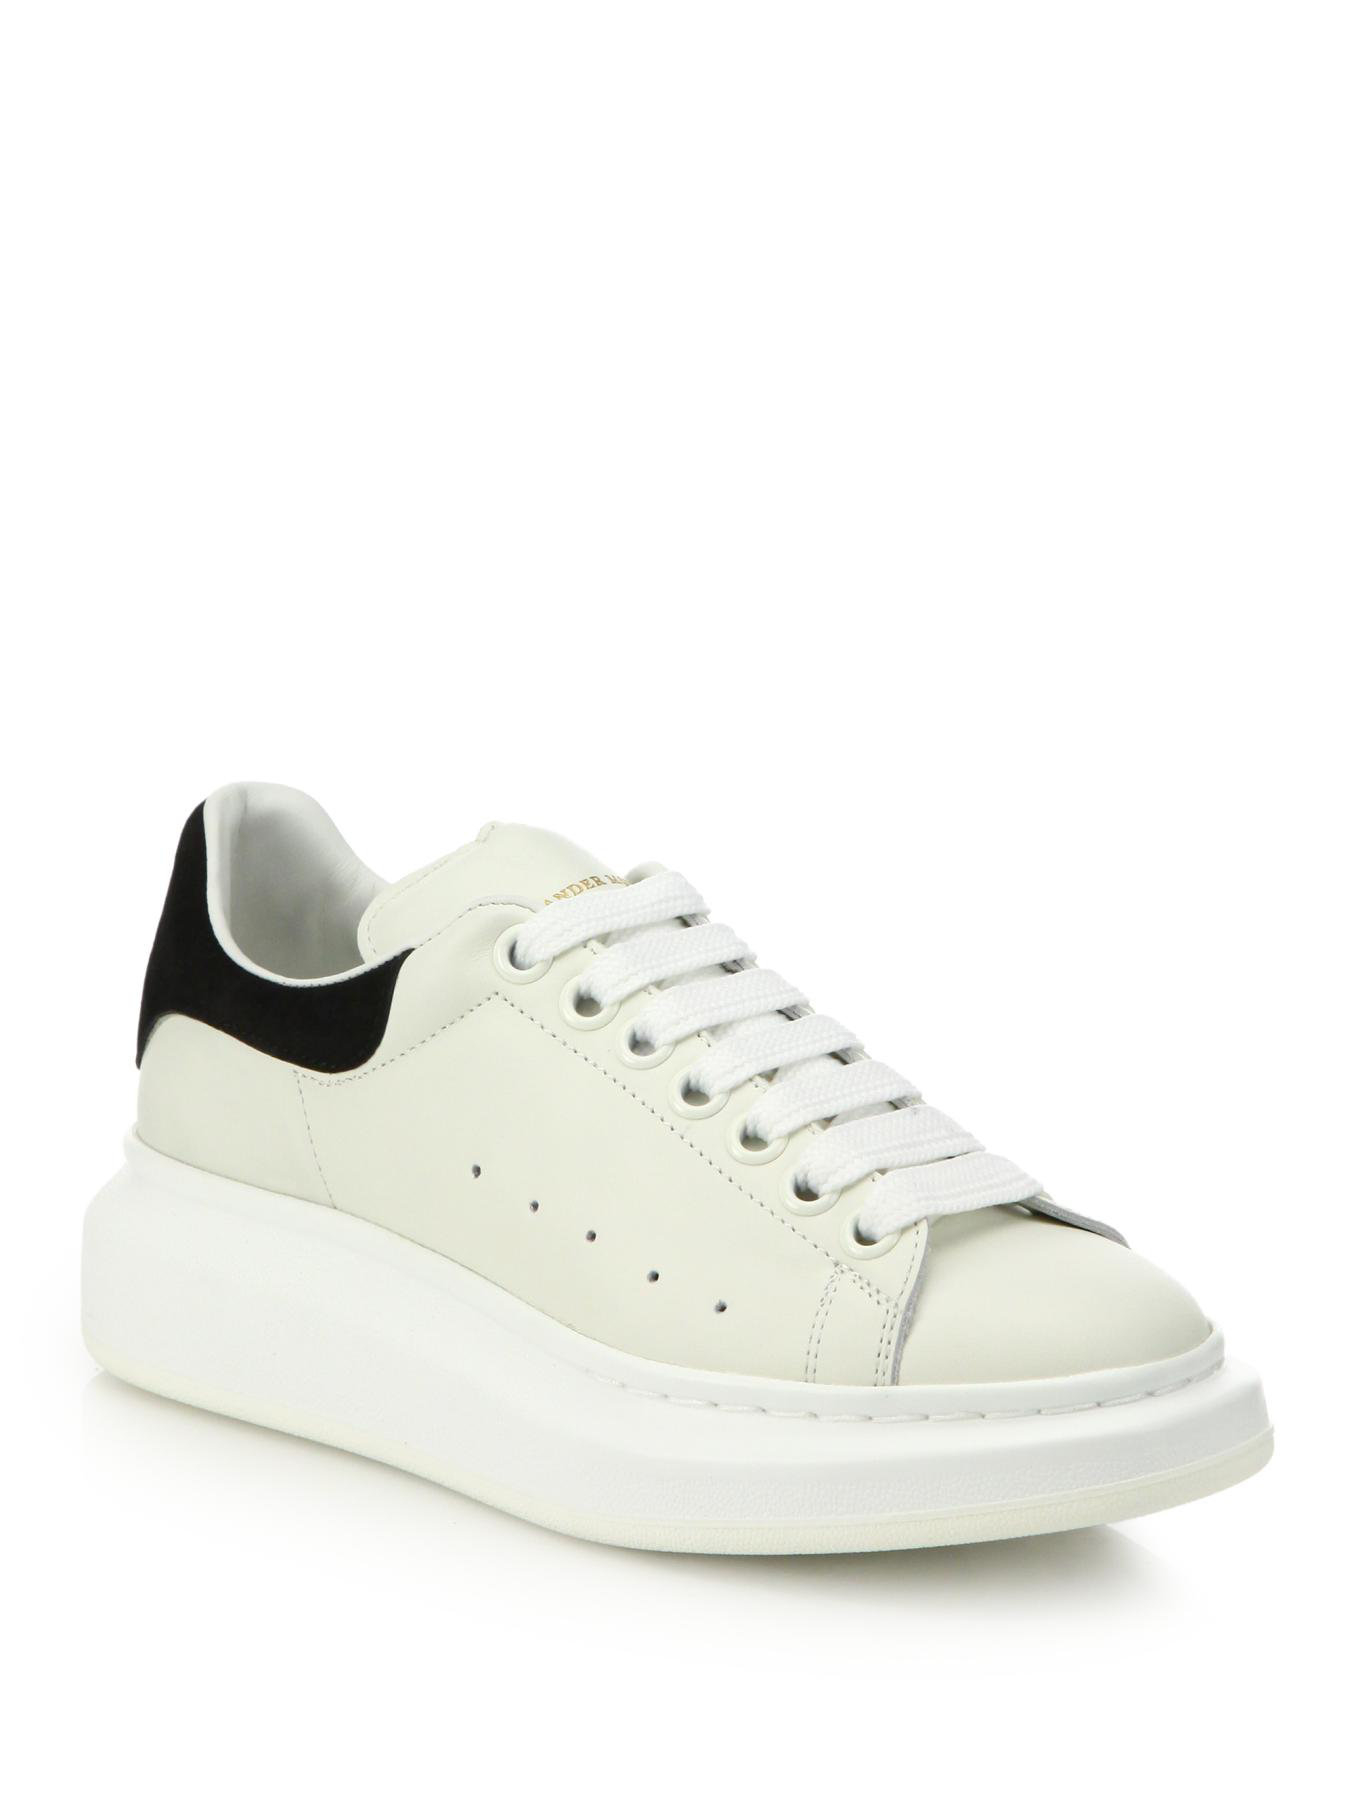 Lyst - Alexander Mcqueen Leather Platform Sneakers in White